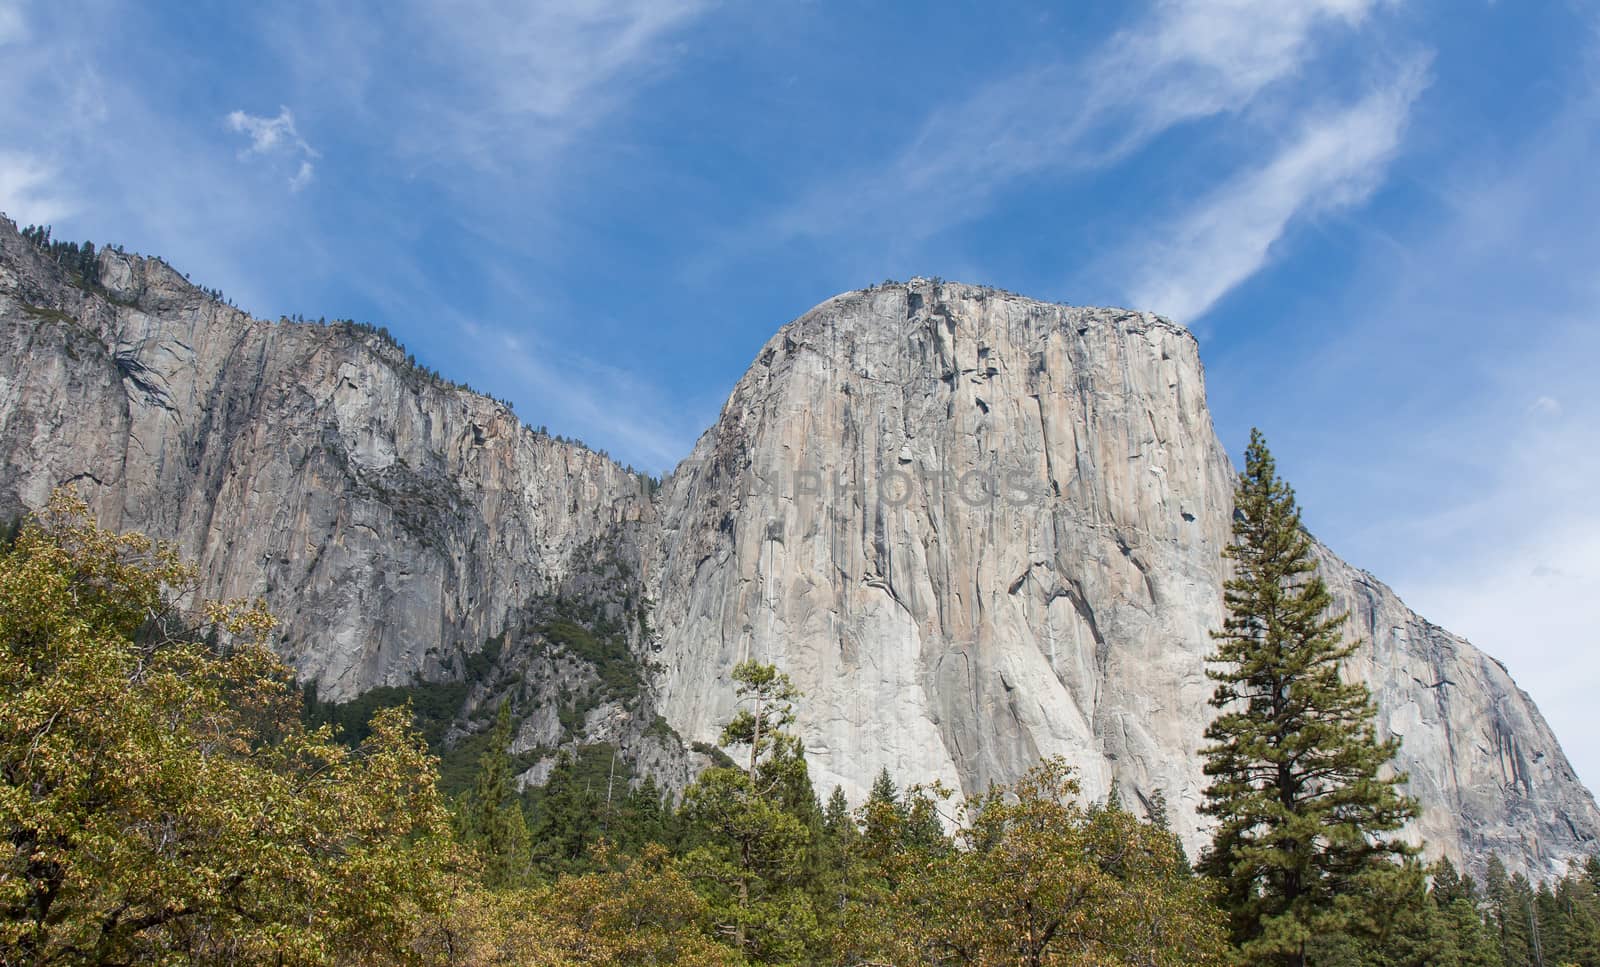 The magnificent El Capitan at Yosemite National Park in California